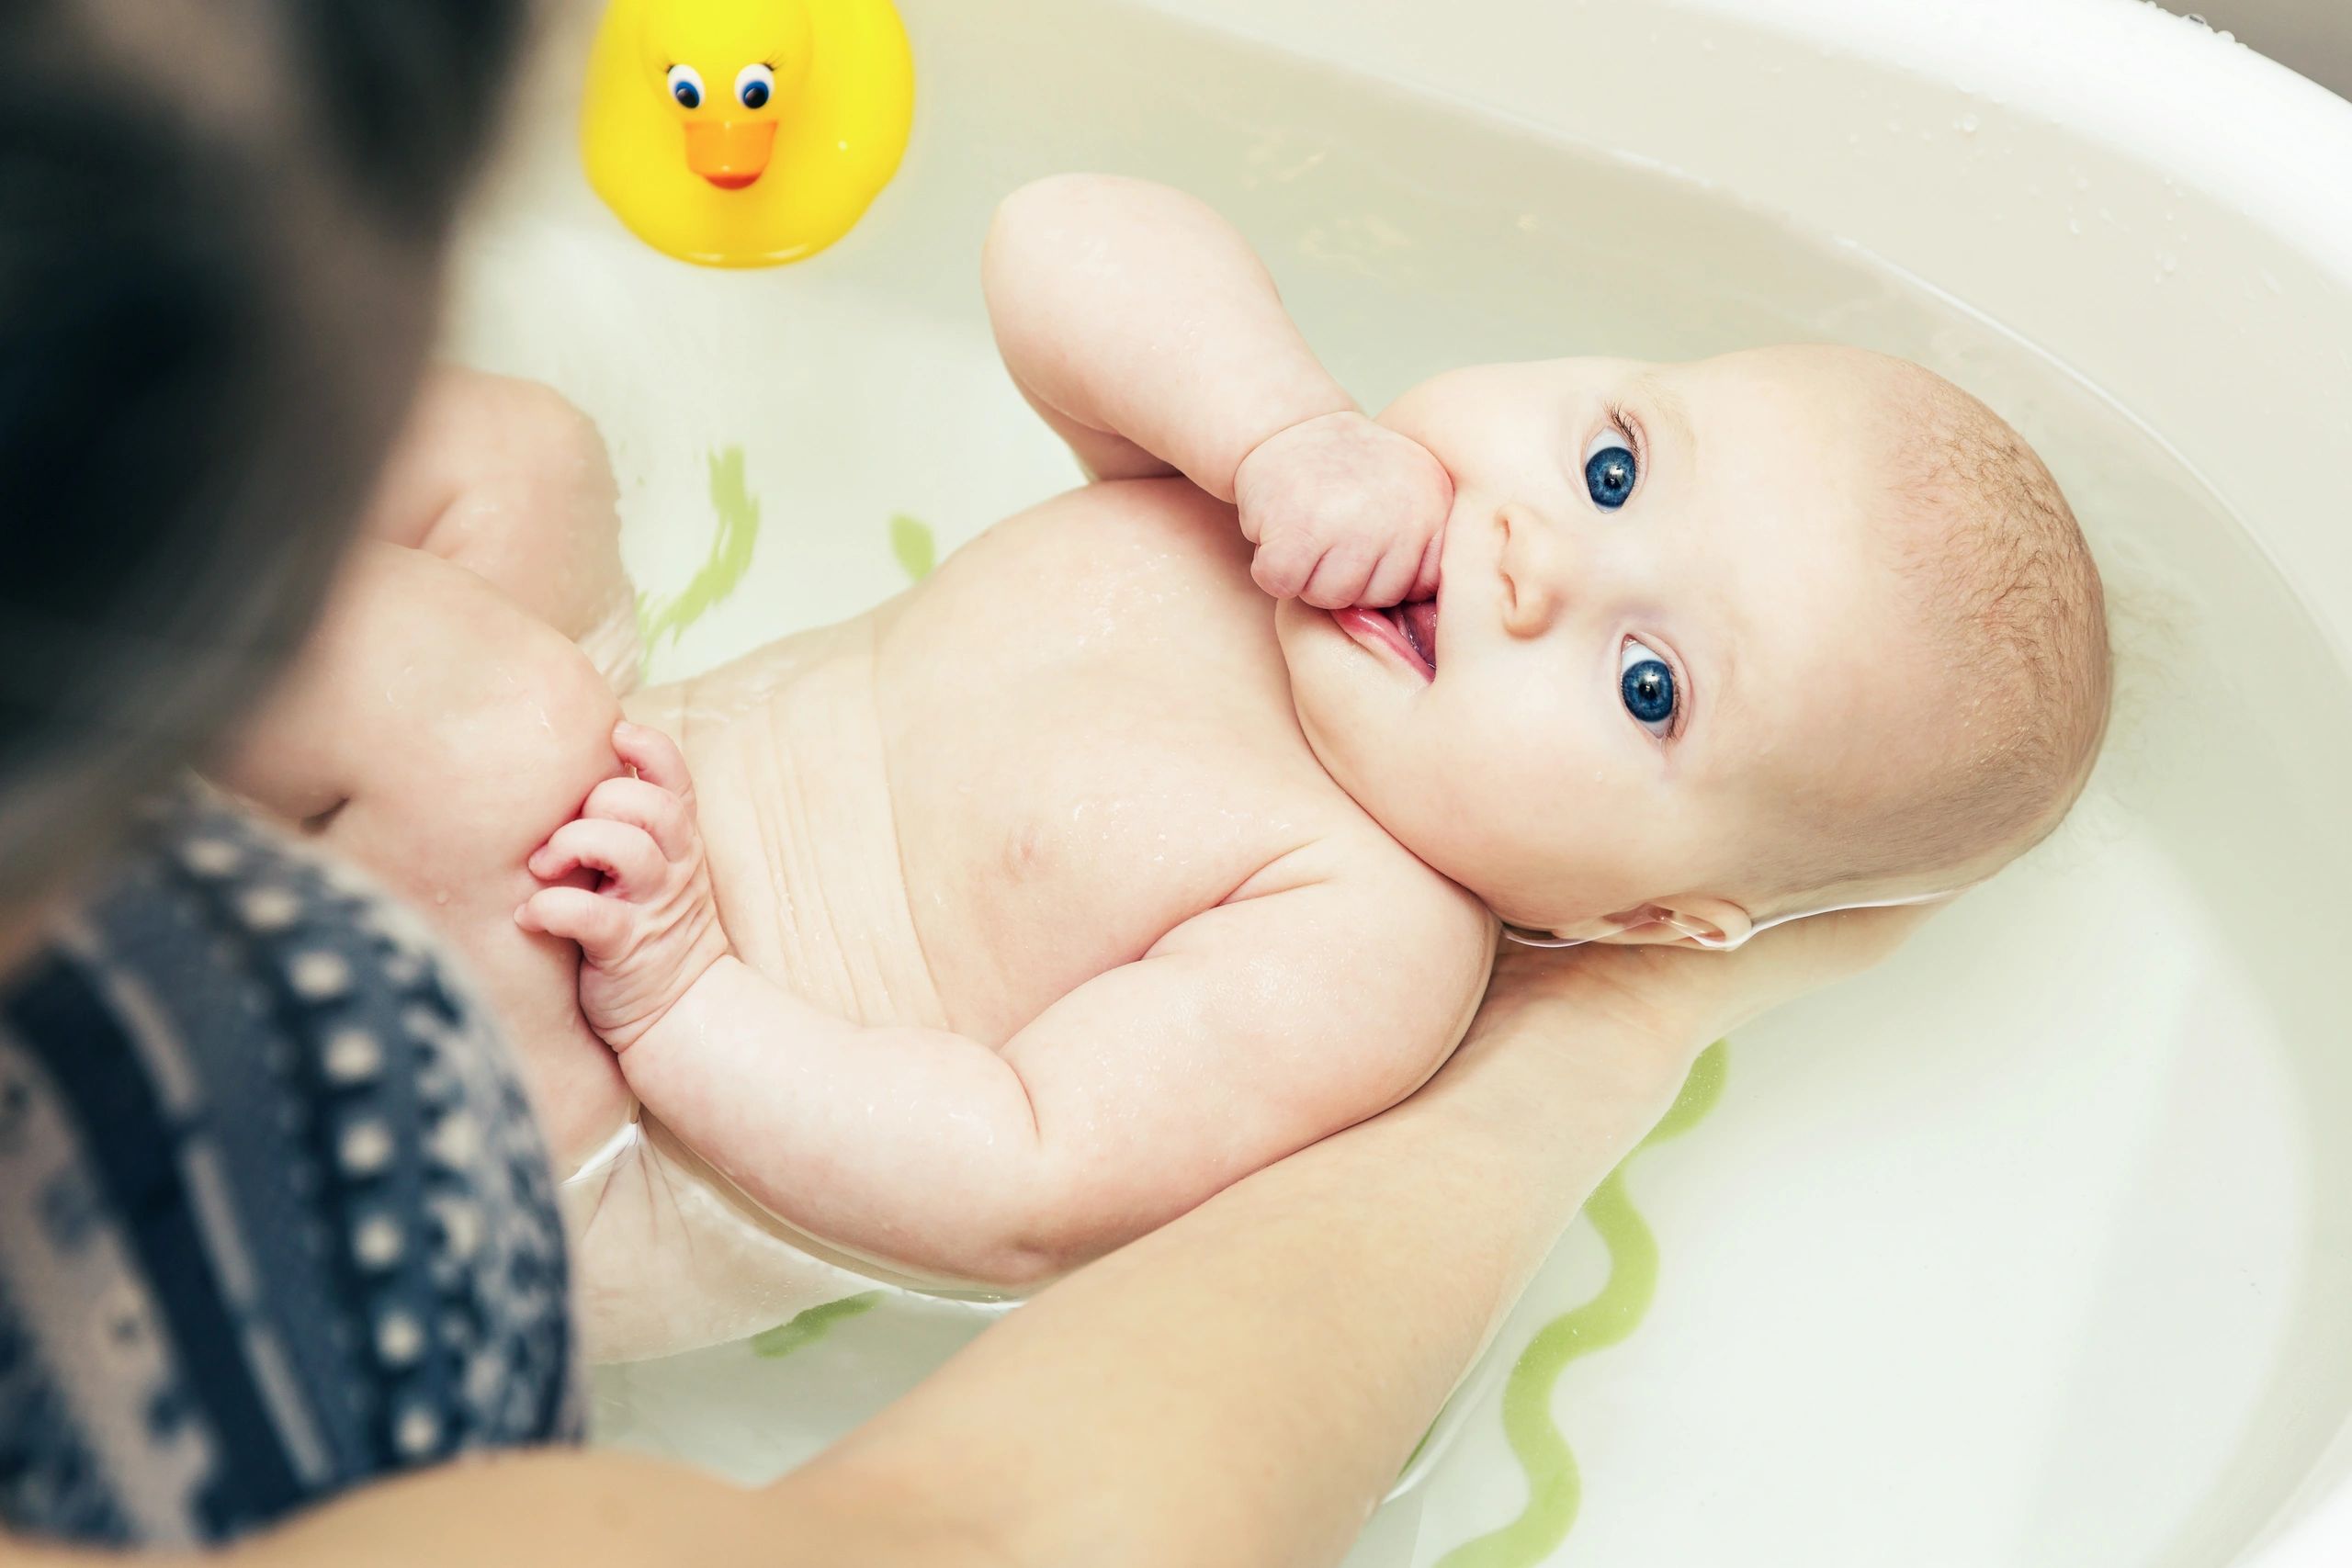 SugarSkinn Baby “Soothing Bath Soak” is the perfect nighttime bath.